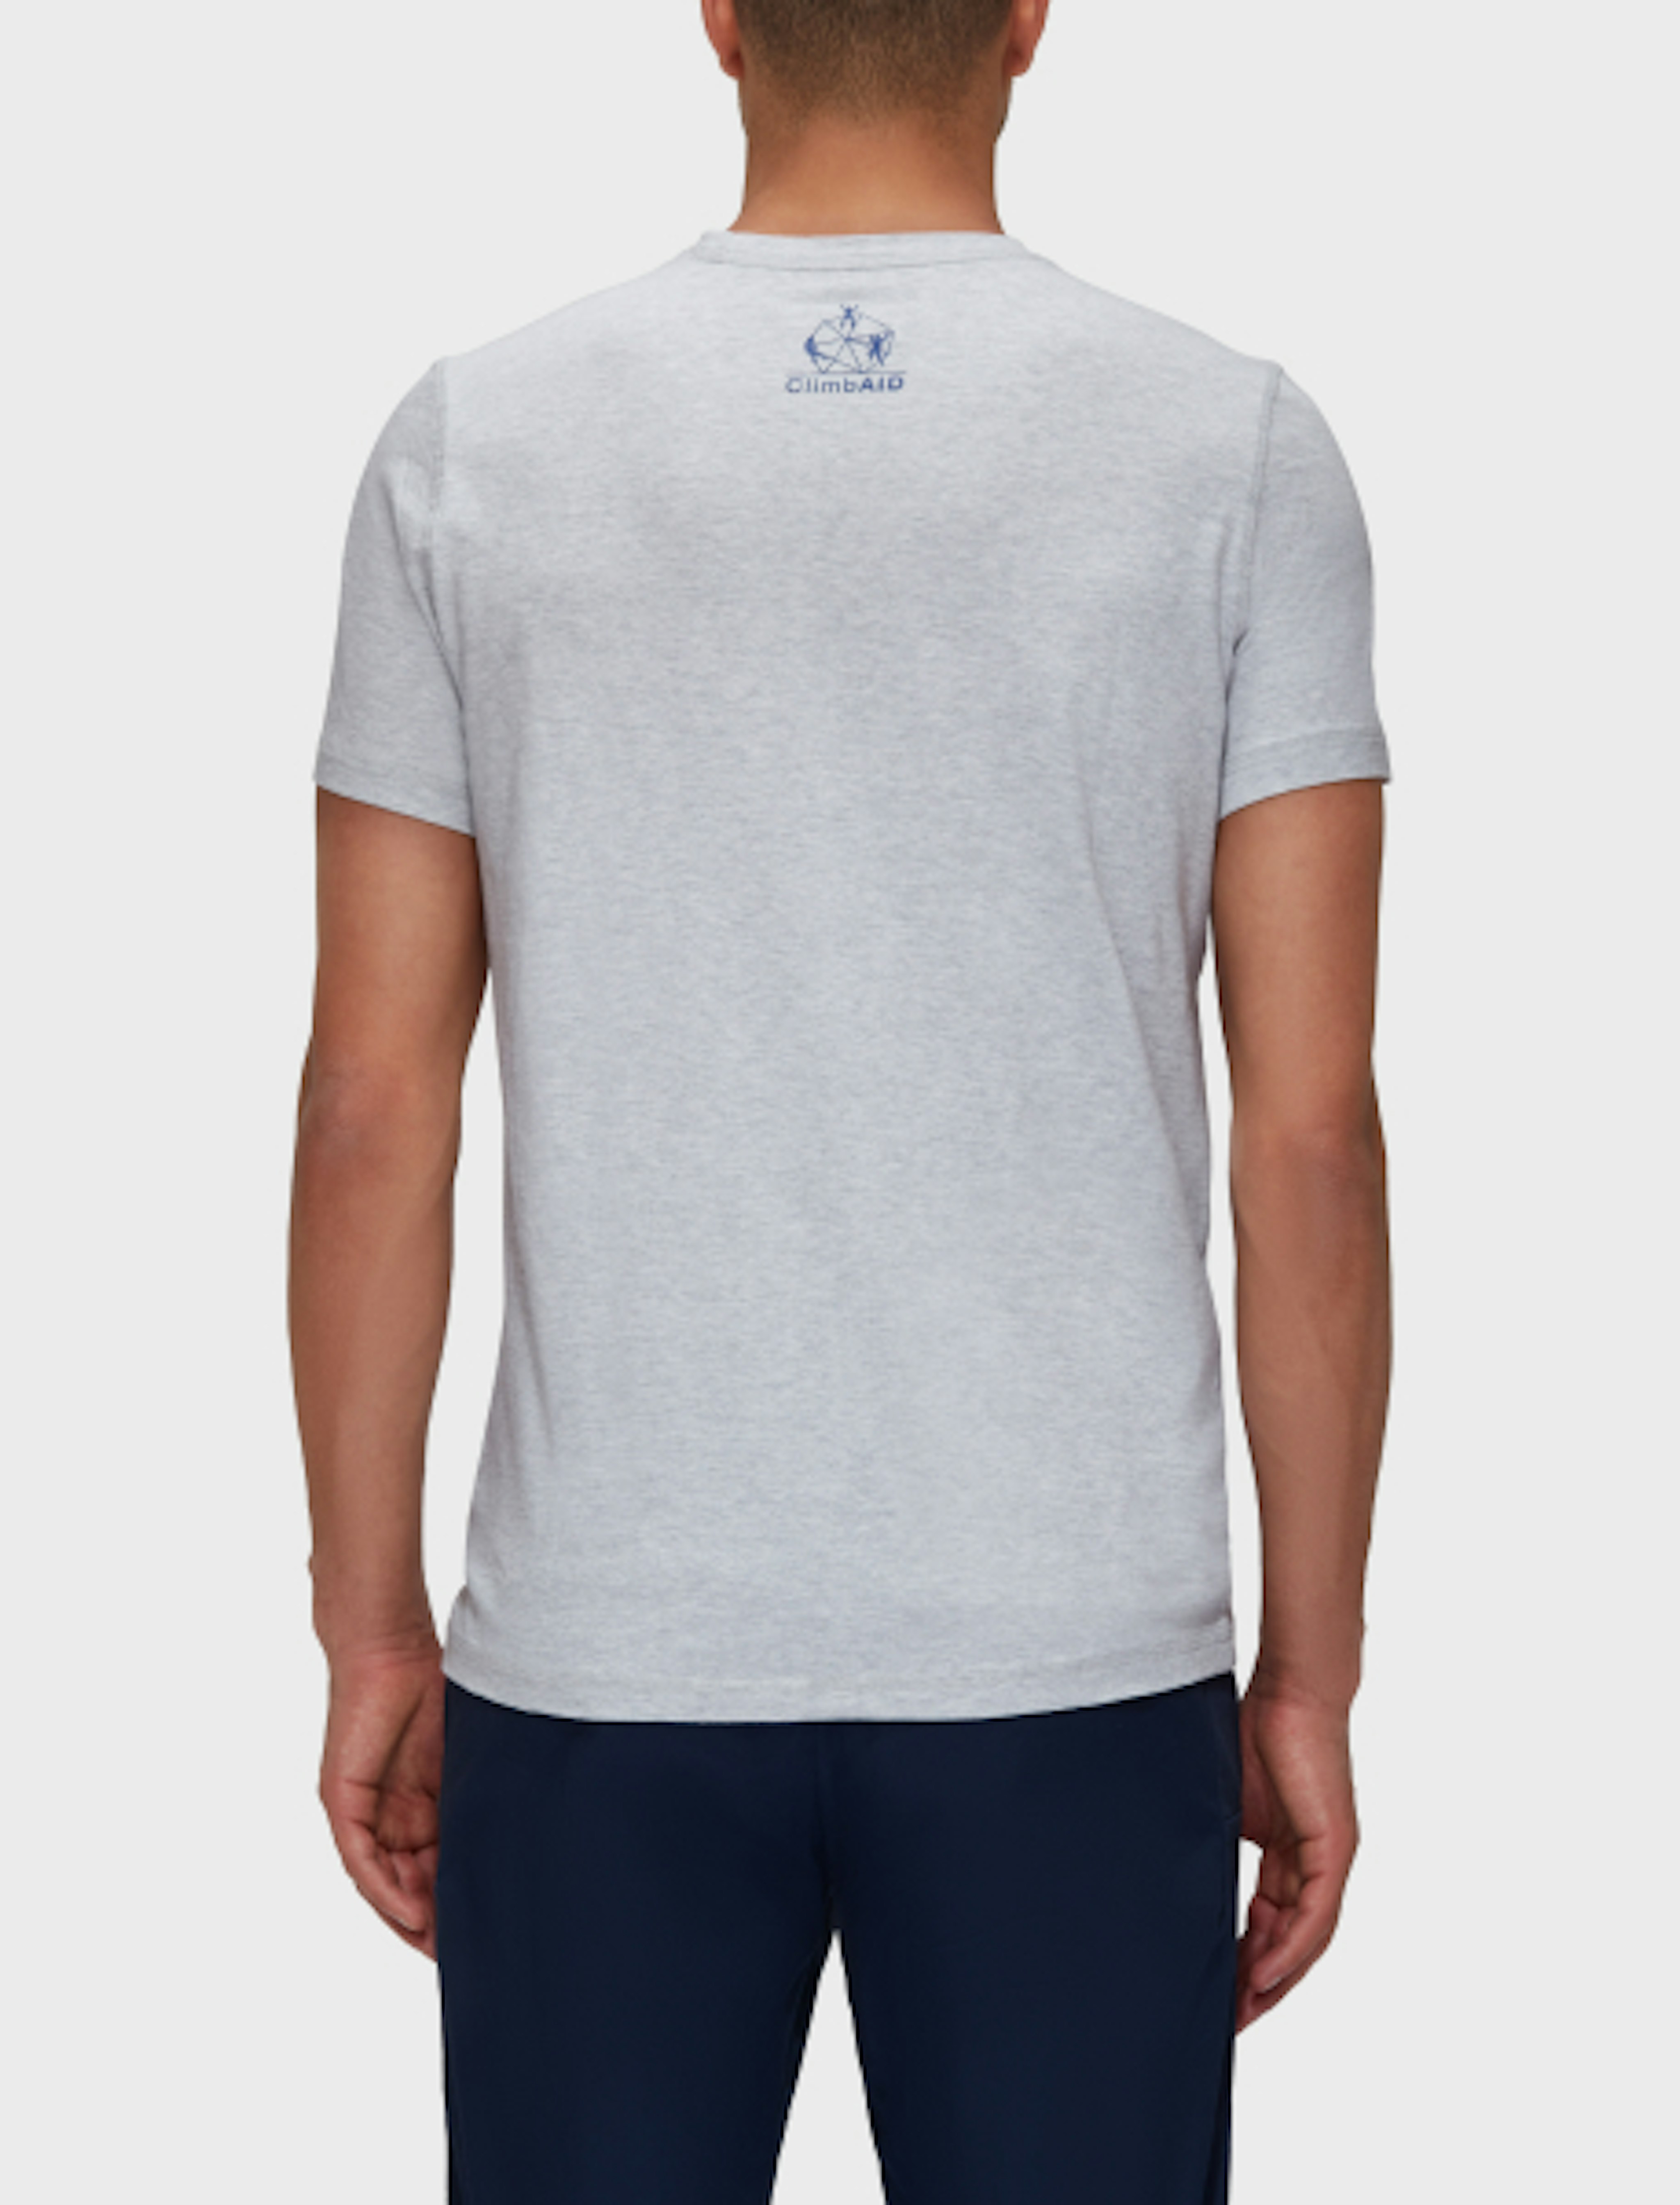 Climbaid Men T-Shirt